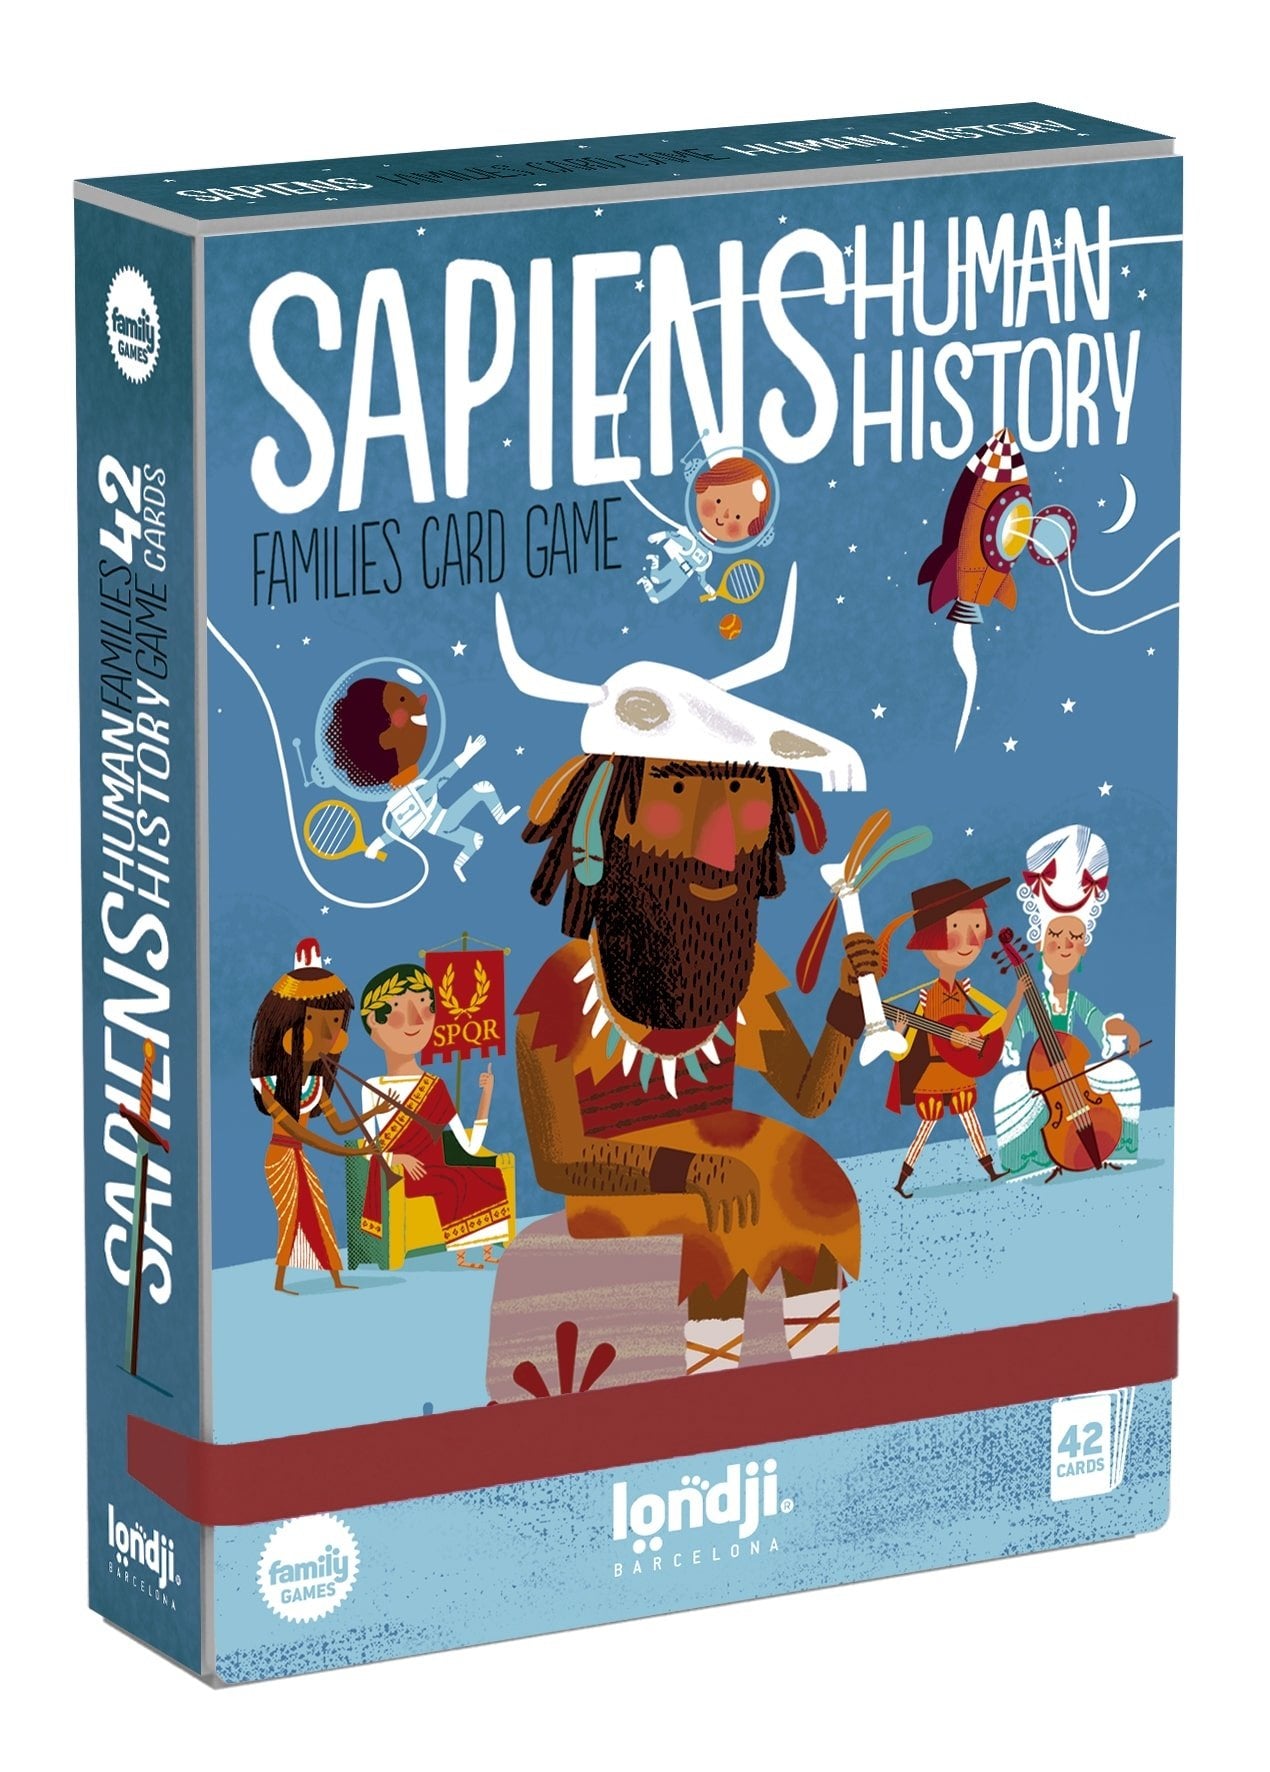 Sapiens Human History Families Card Game